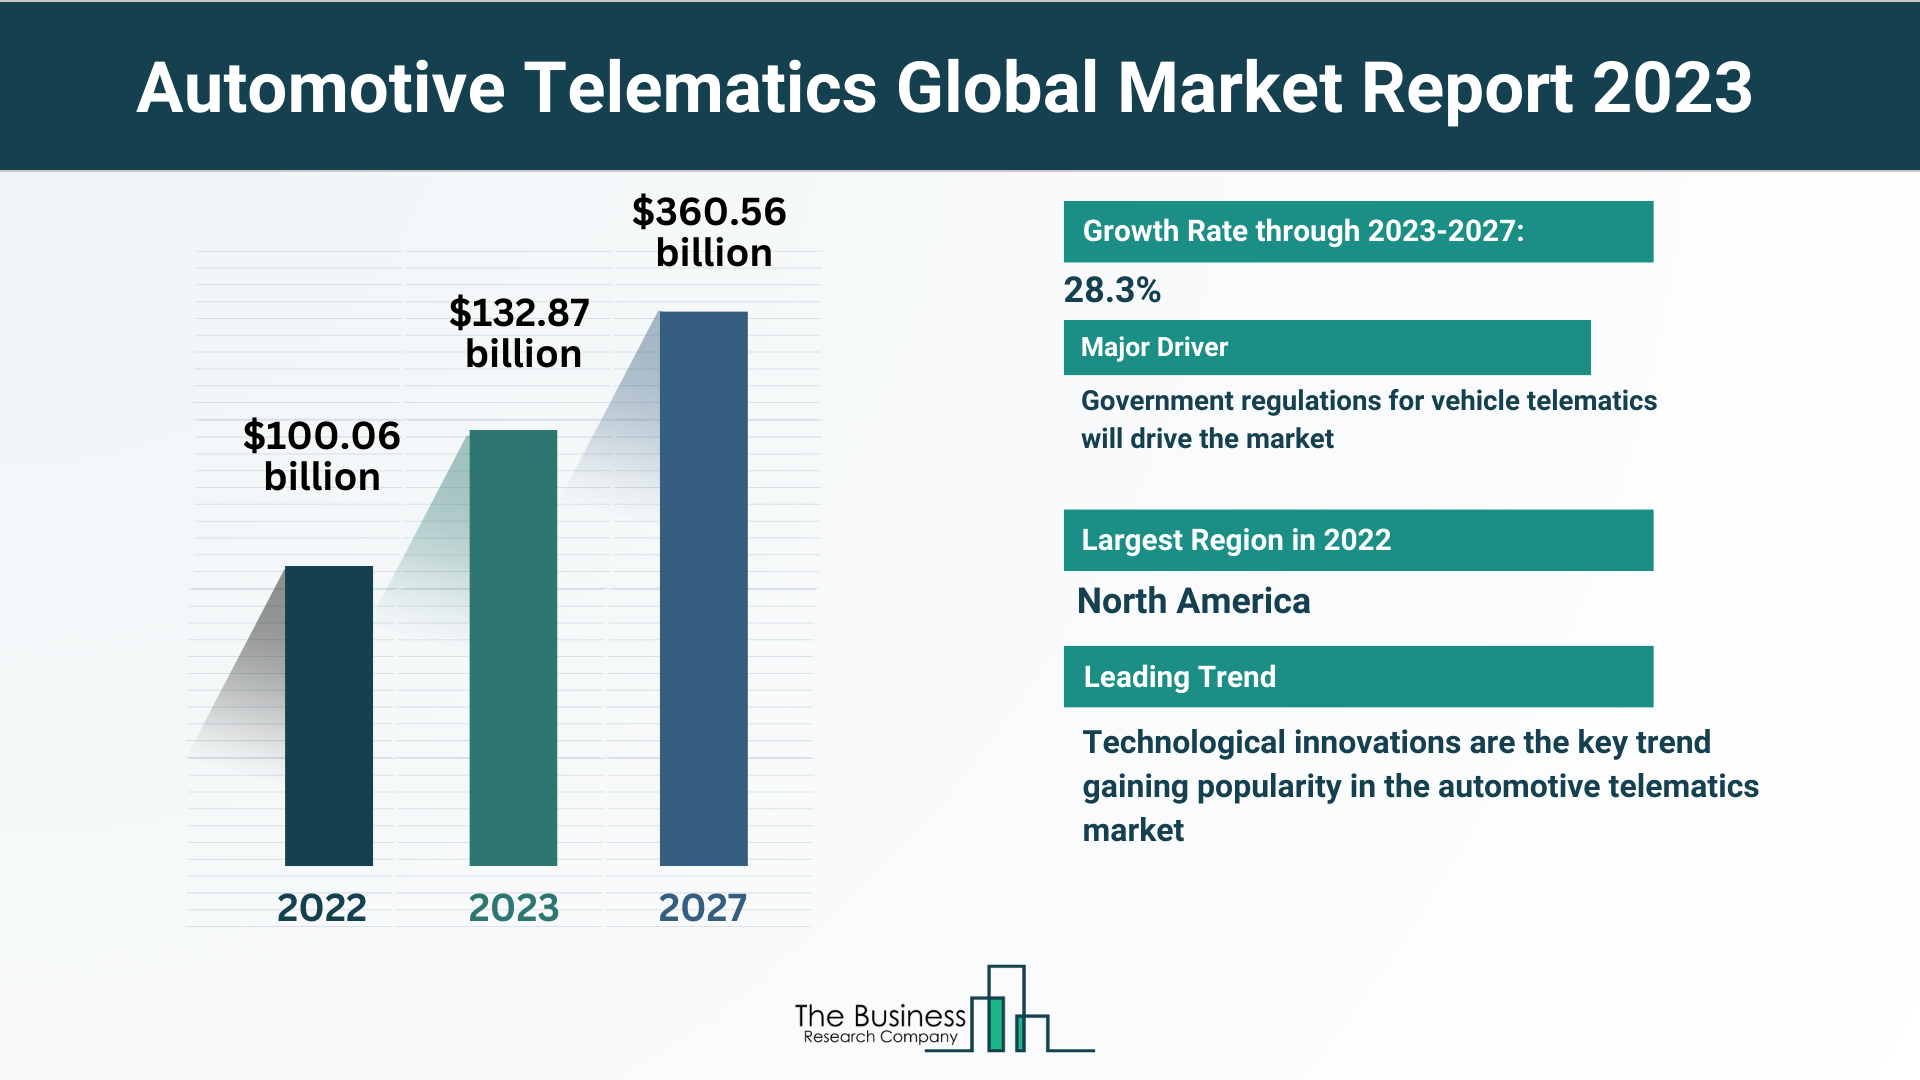 Global Automotive Telematics Market